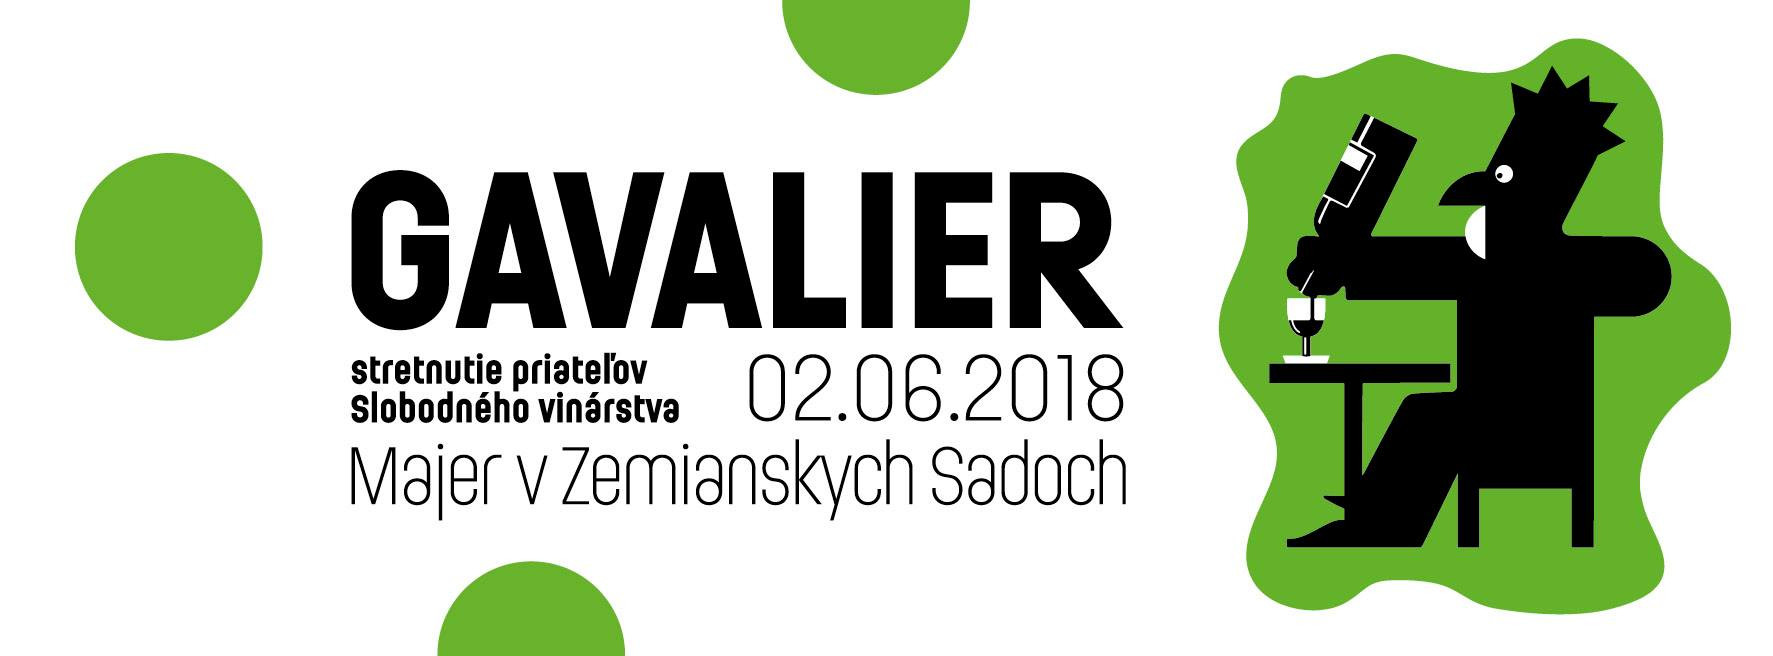 Gavalier 2018 v Slobodnom vinárstve (2.6.2018)